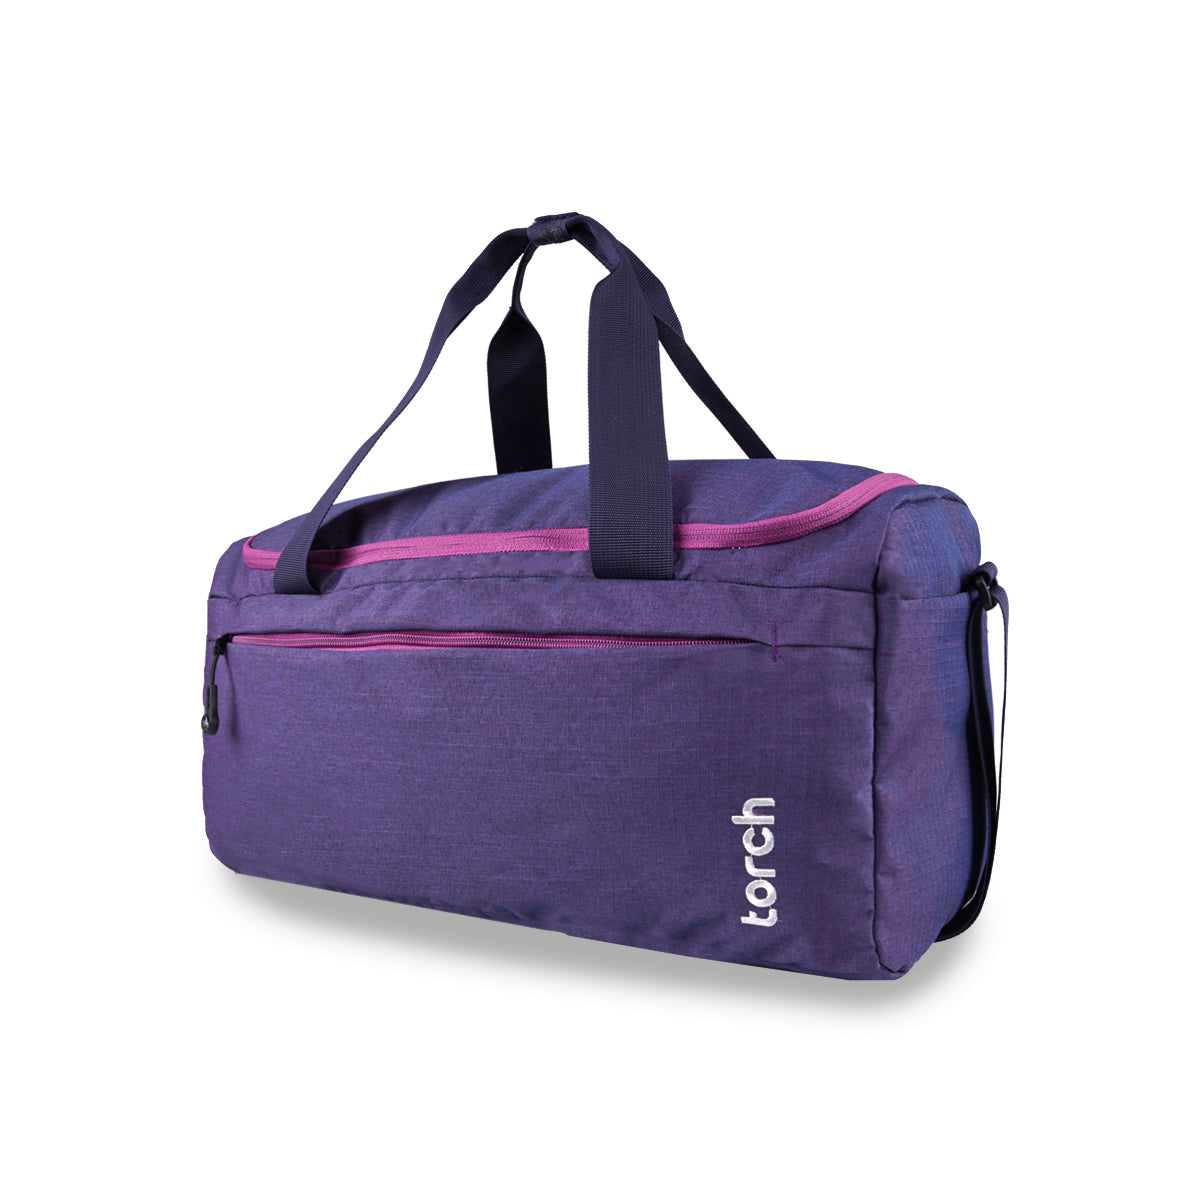 Paket Traveling - Lazuardi Duffle Bag+ Choho Charger Pack+ Yeocha E Toiletries + Cuello Bantal Leher